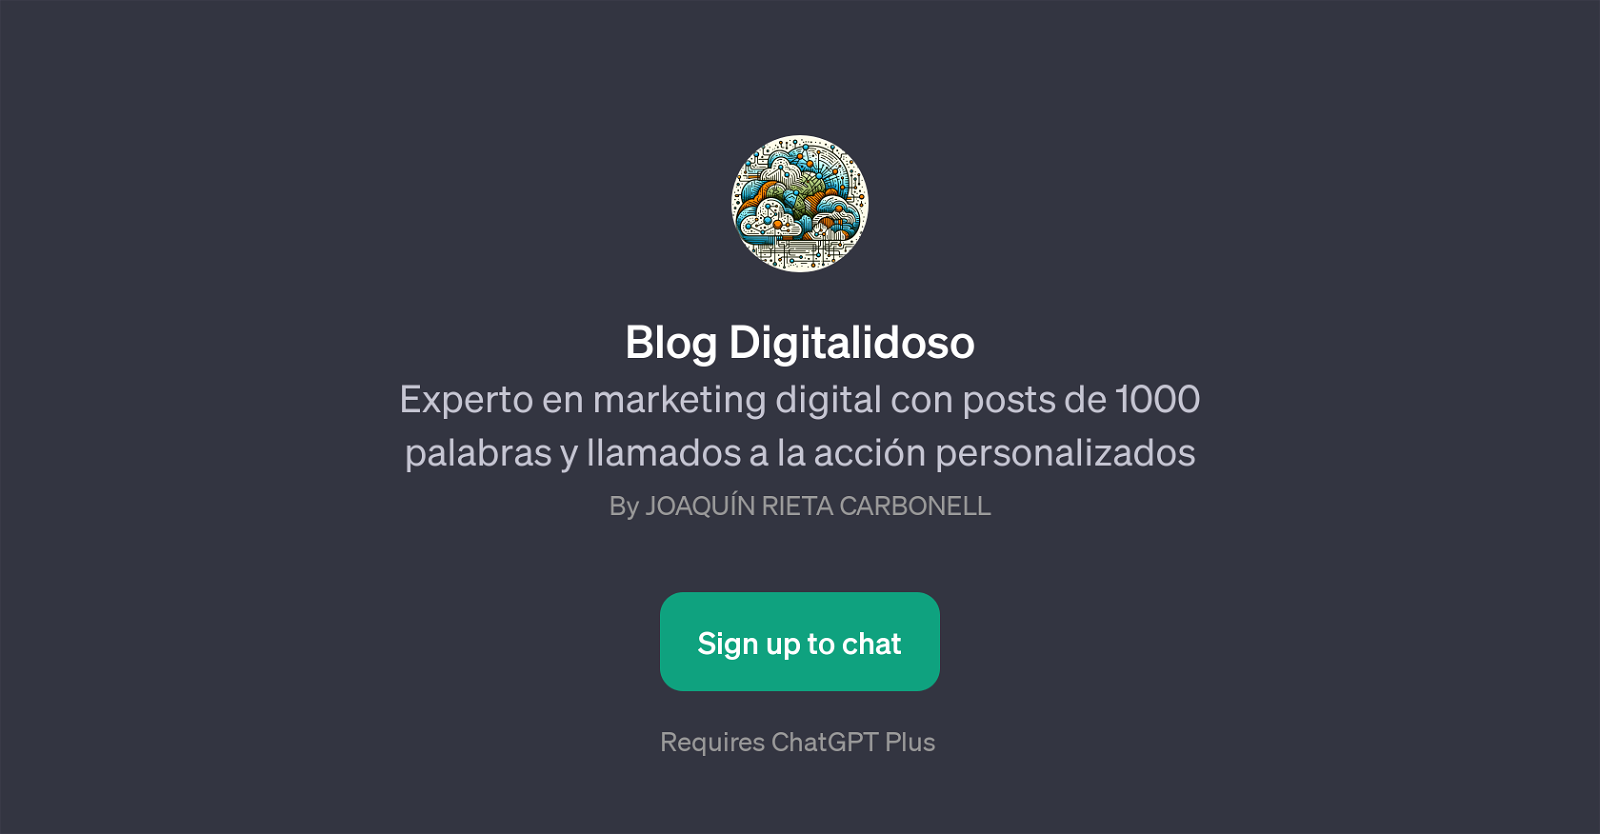 Blog Digitalidoso website